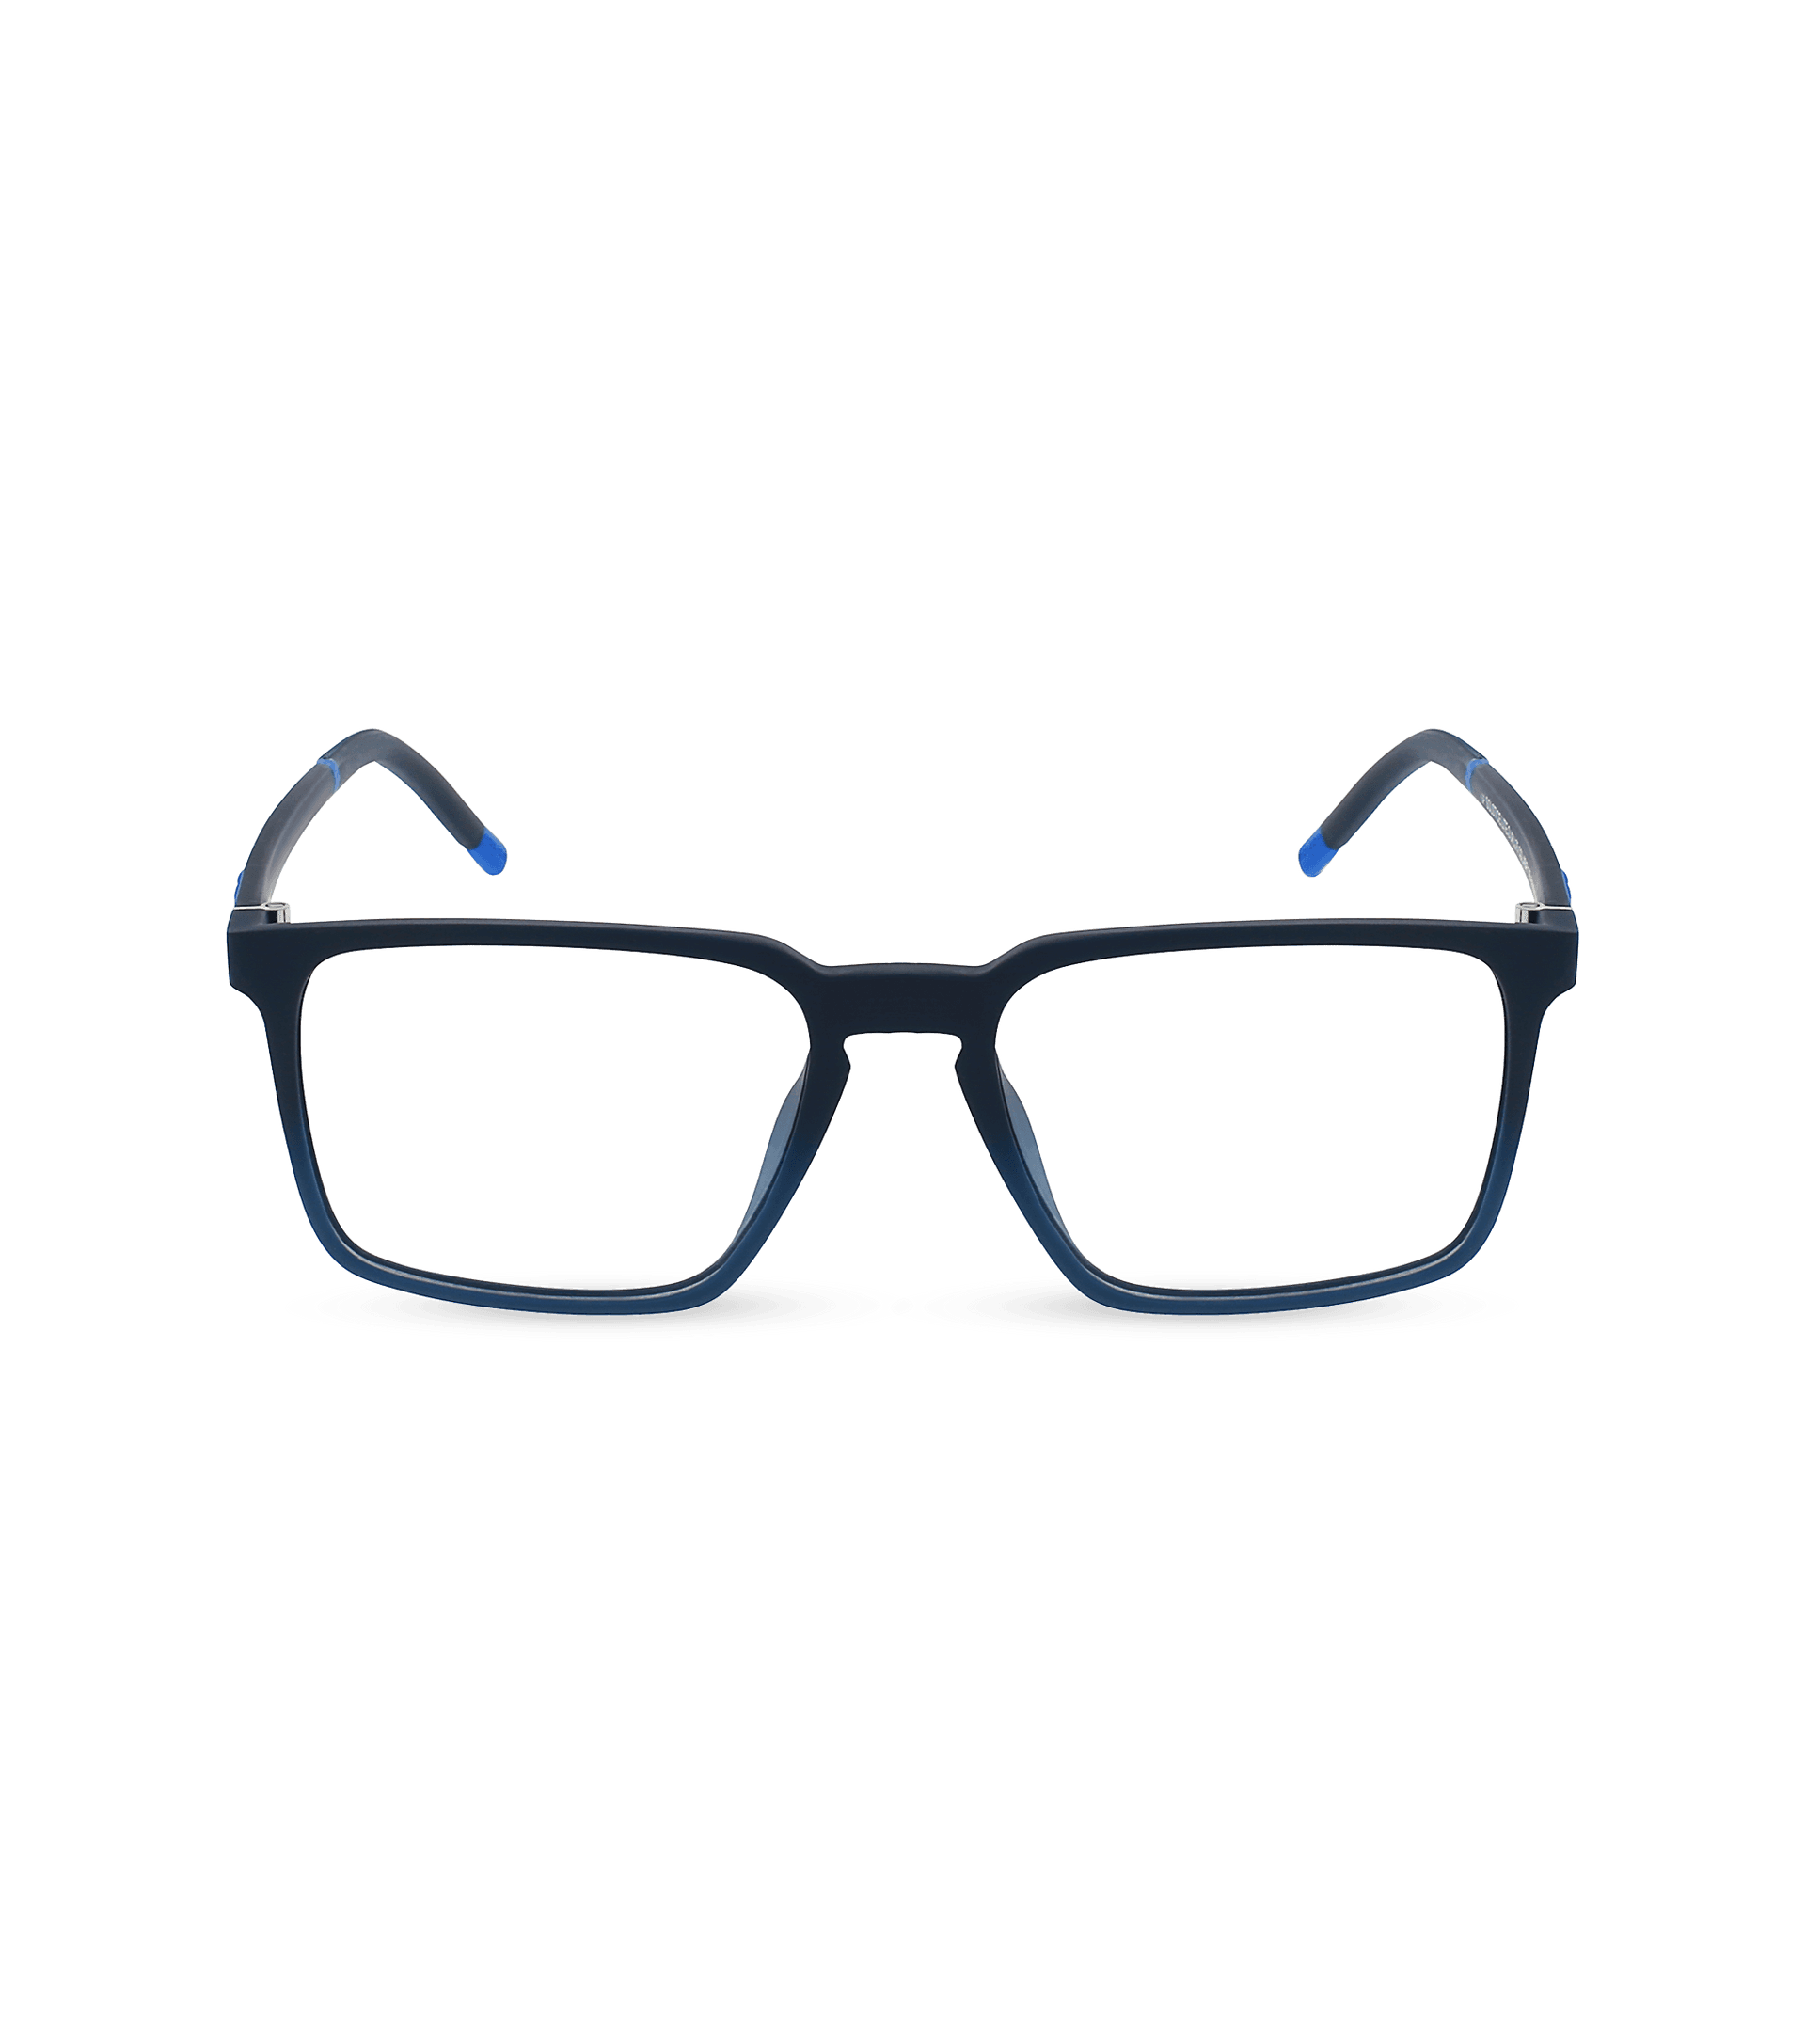 Men's Optical Glasses - Police